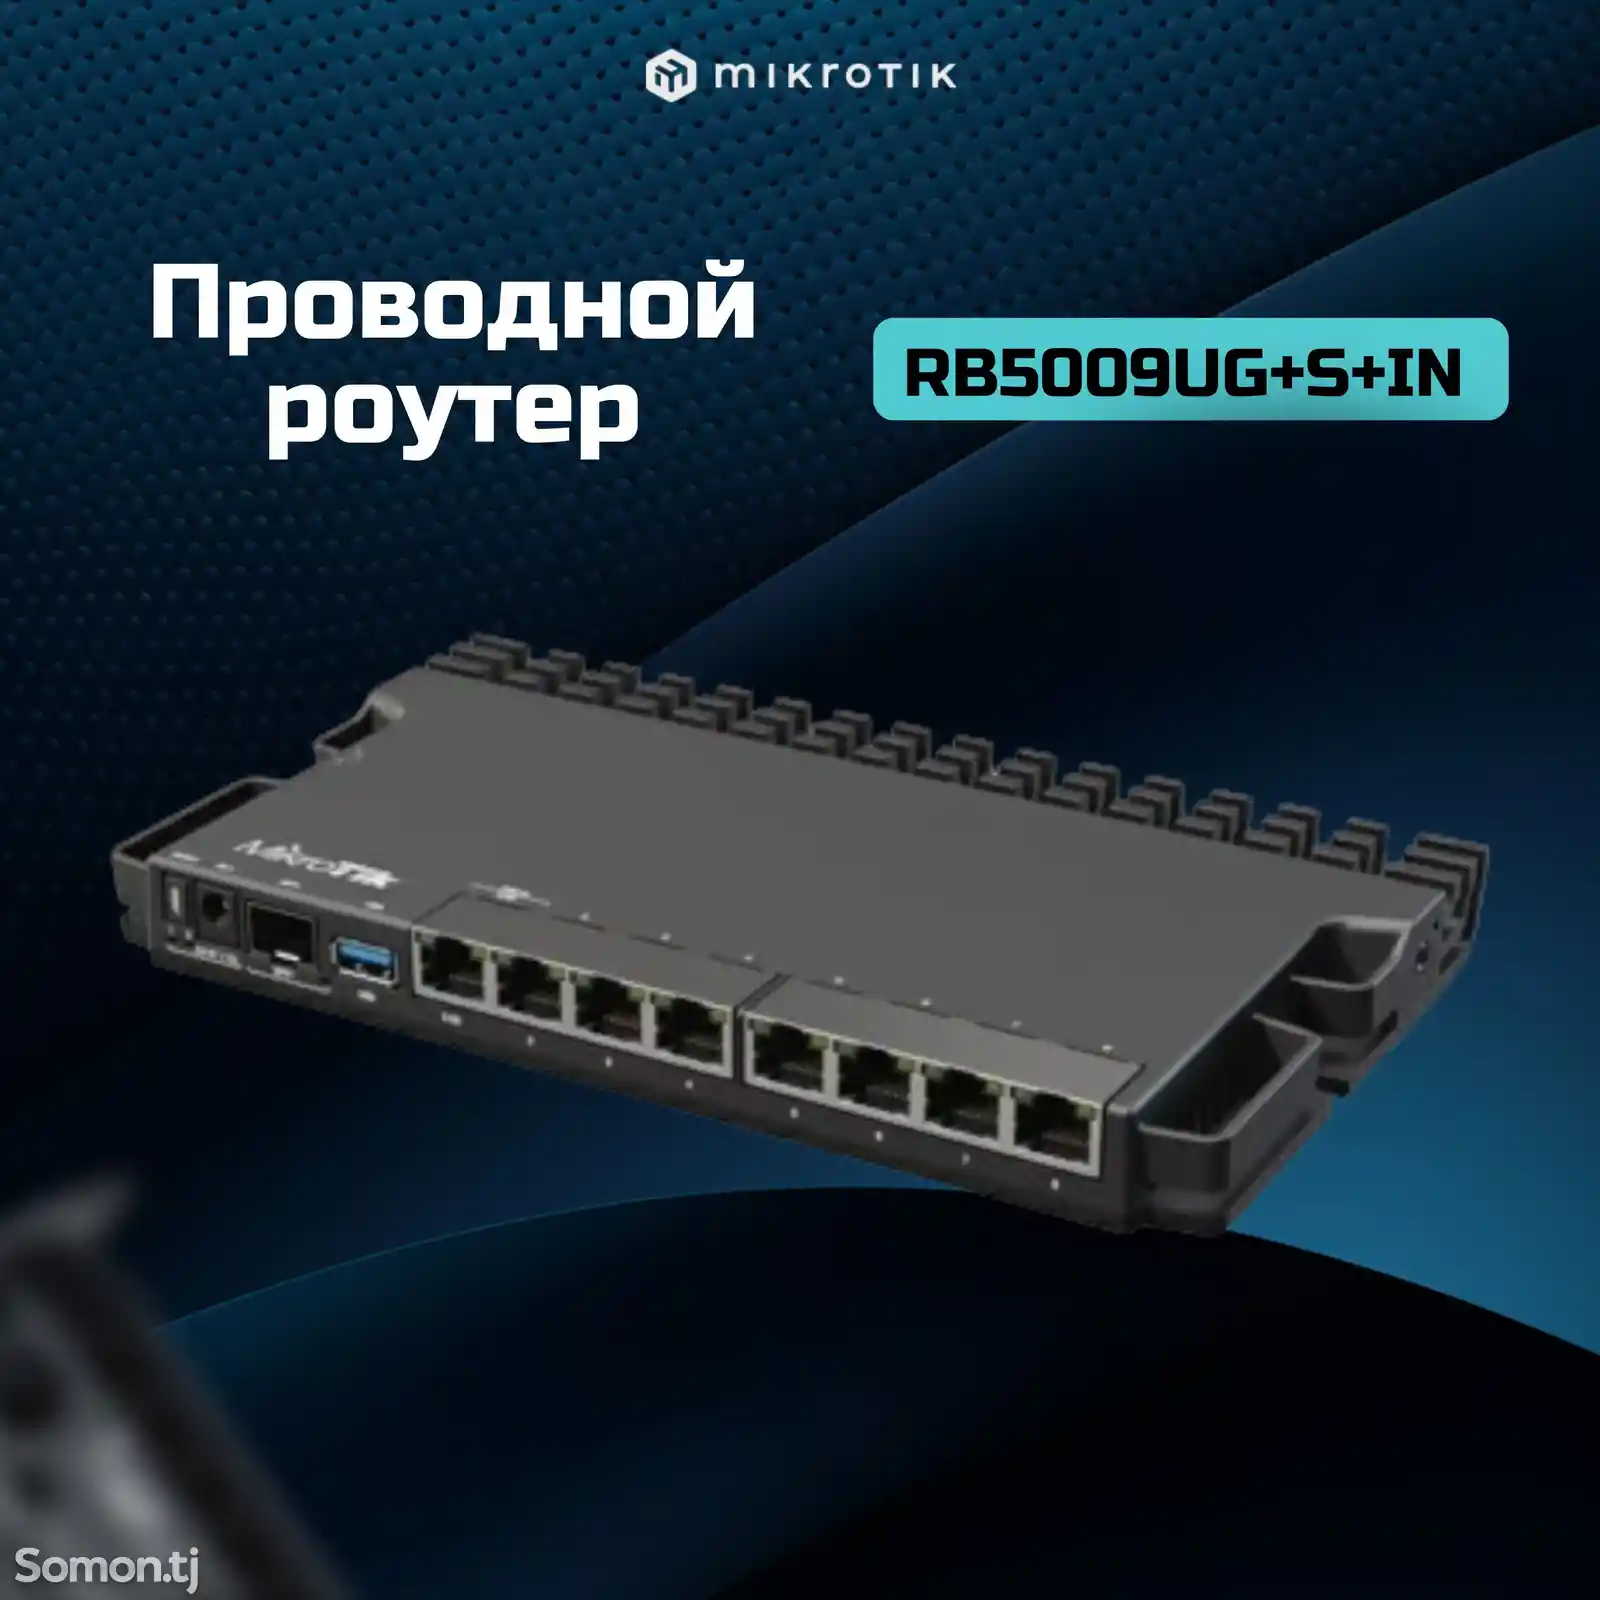 Маршрутизатор MikroTik RB5009UG+S+IN-1